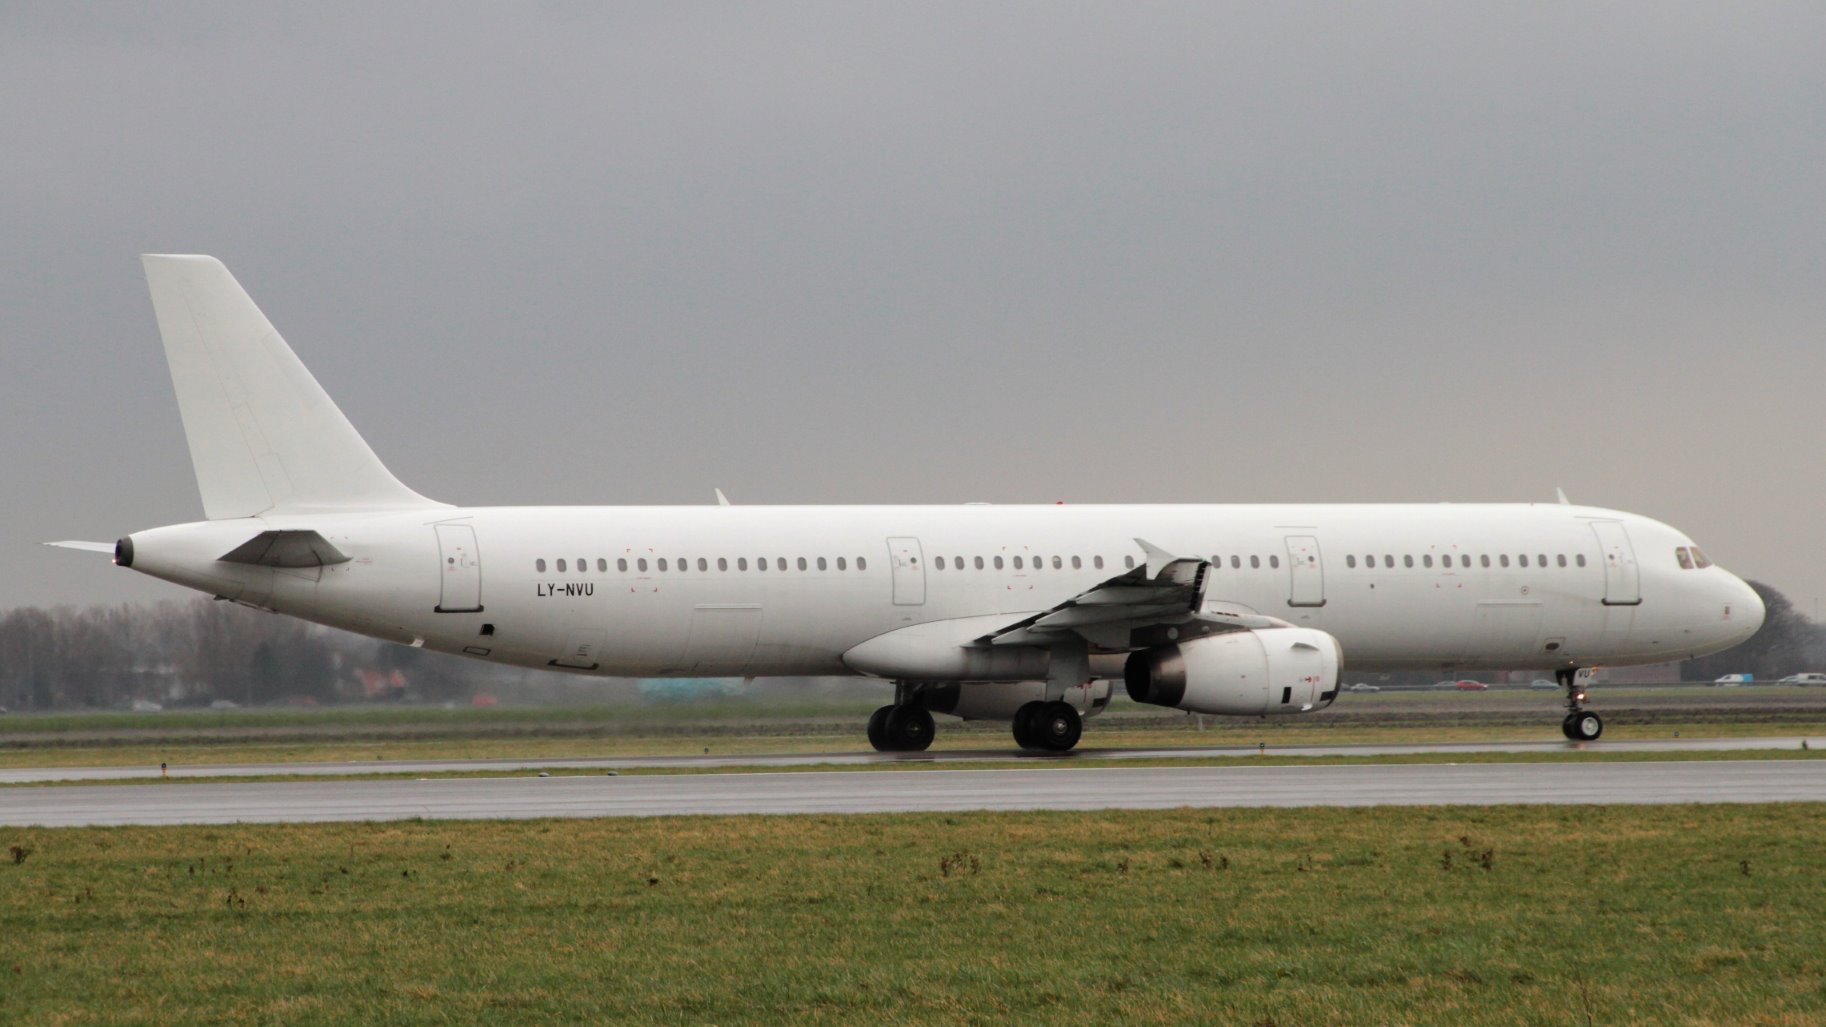 LY-NVU Avion Express Airbus A321-200 - MSN 1421